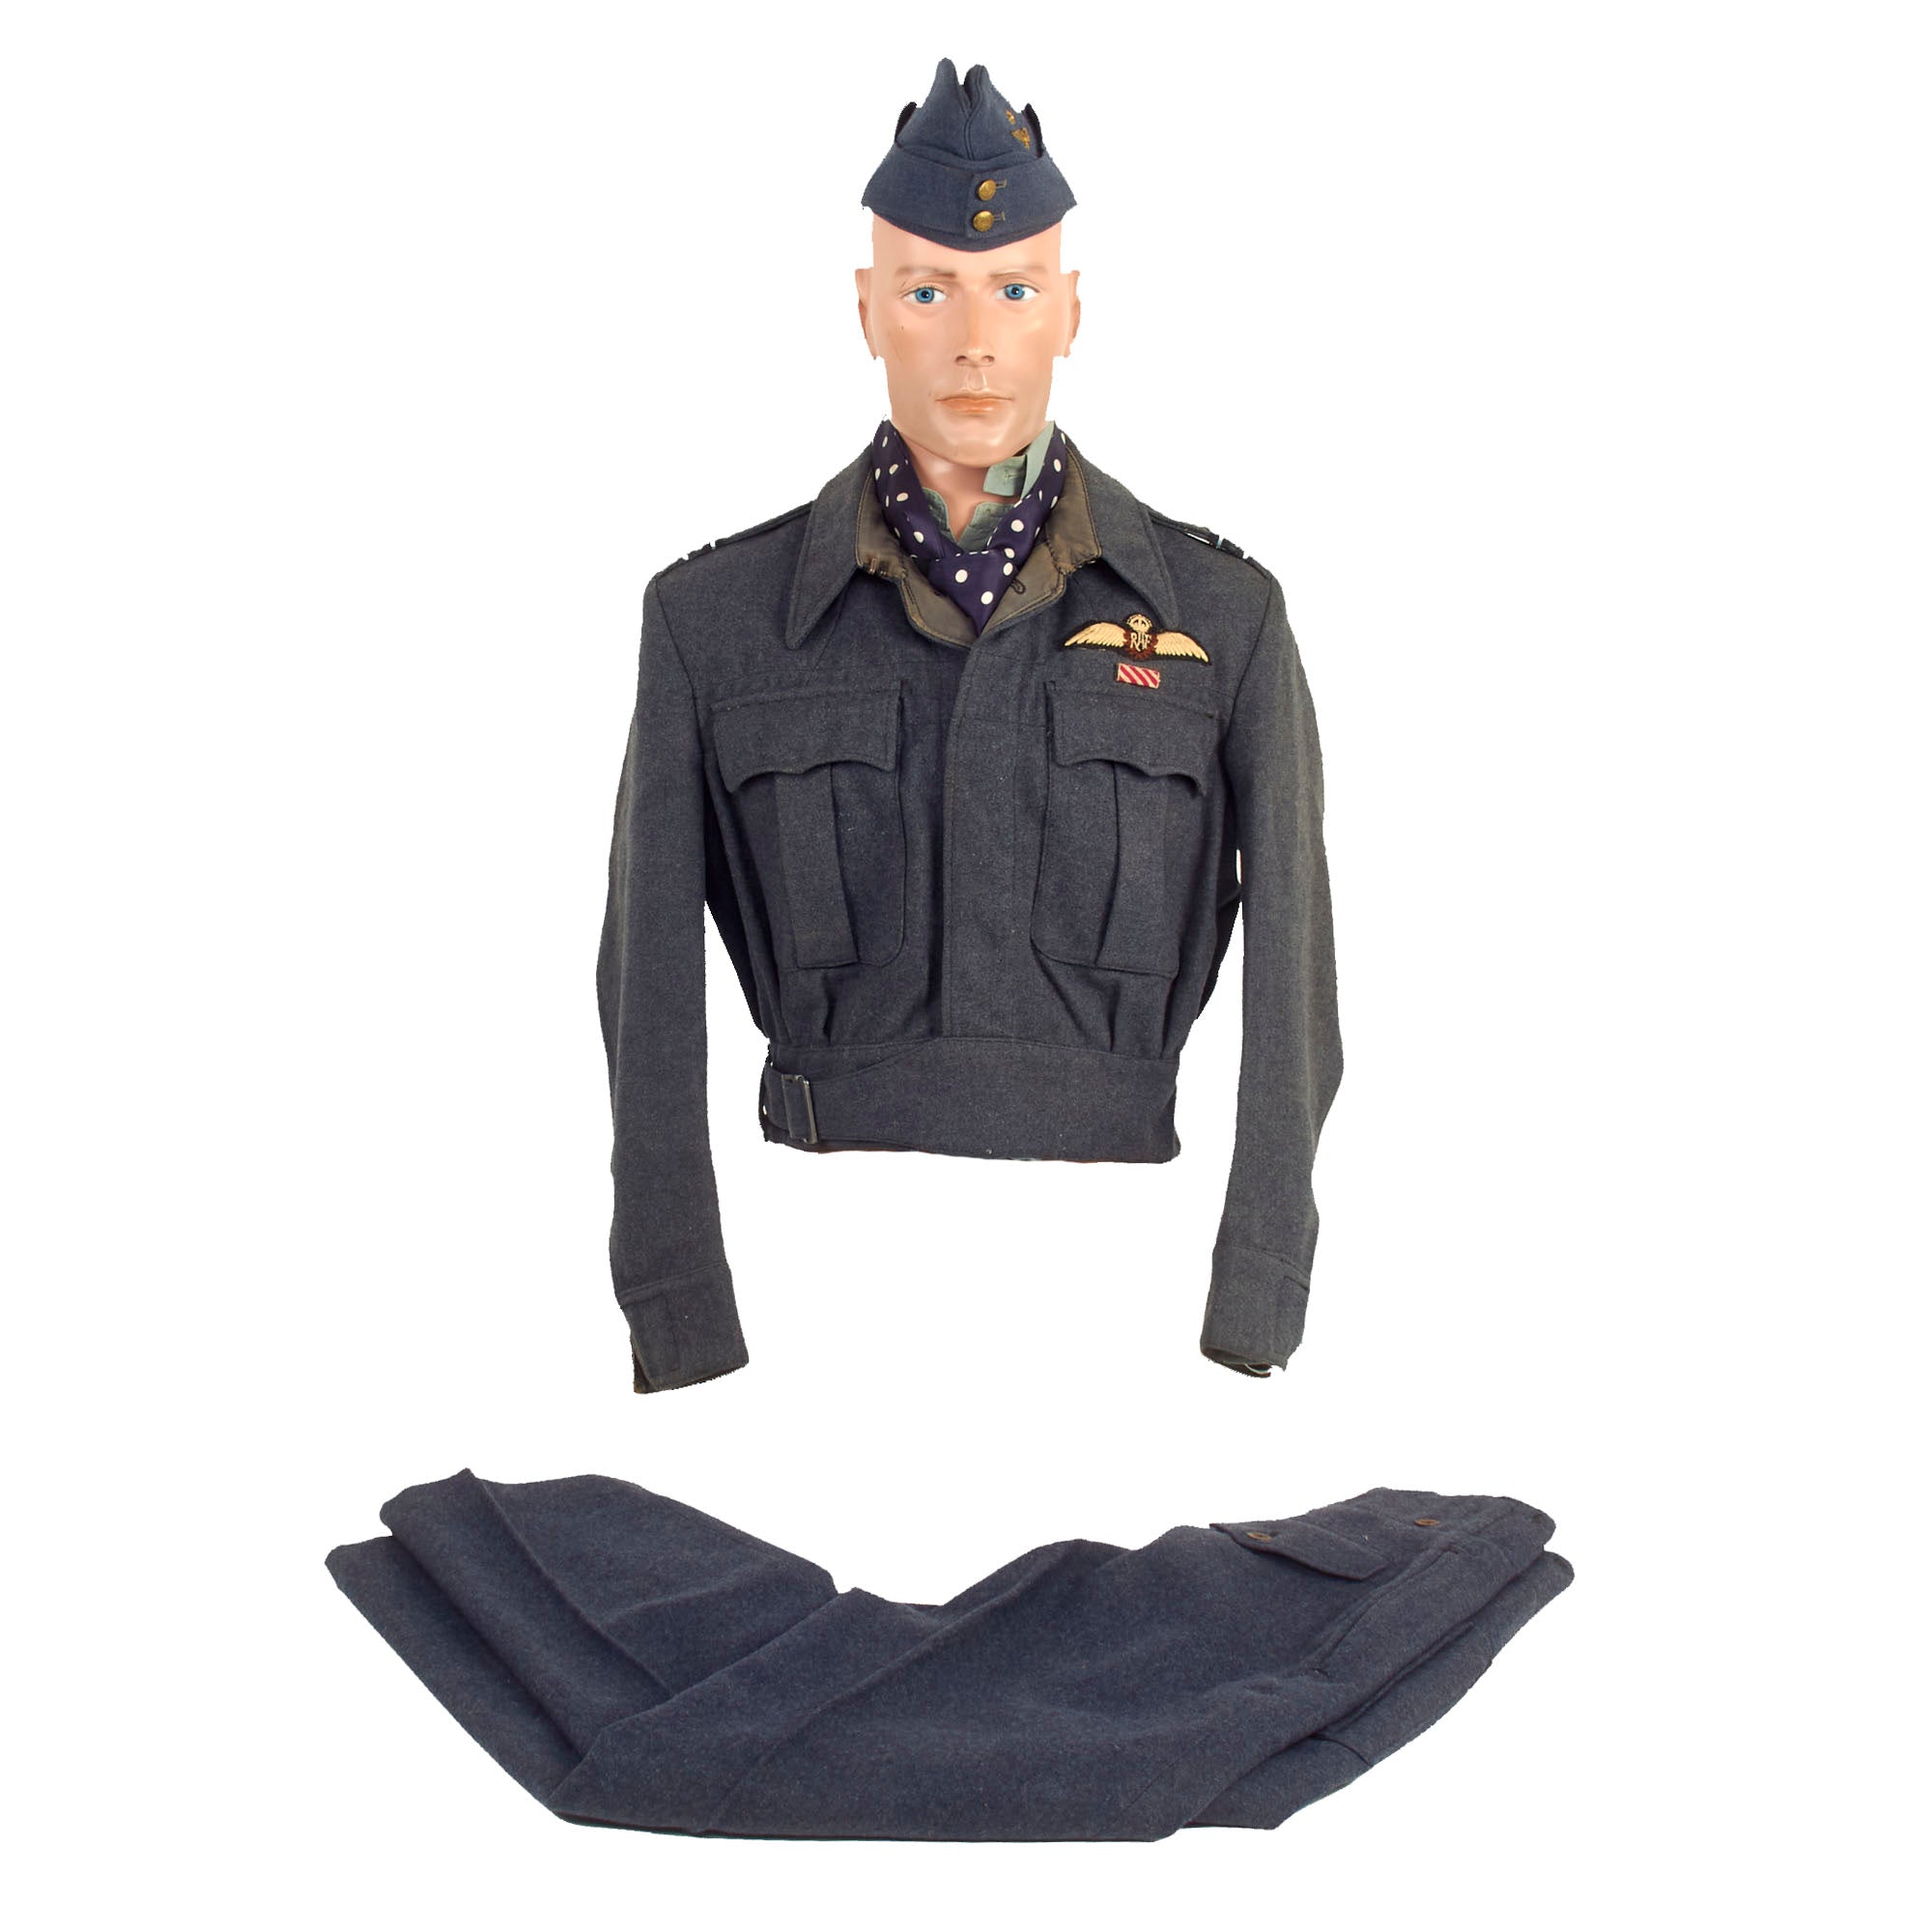 Original WWII British Royal Air Force Pilot's Uniform Grouping